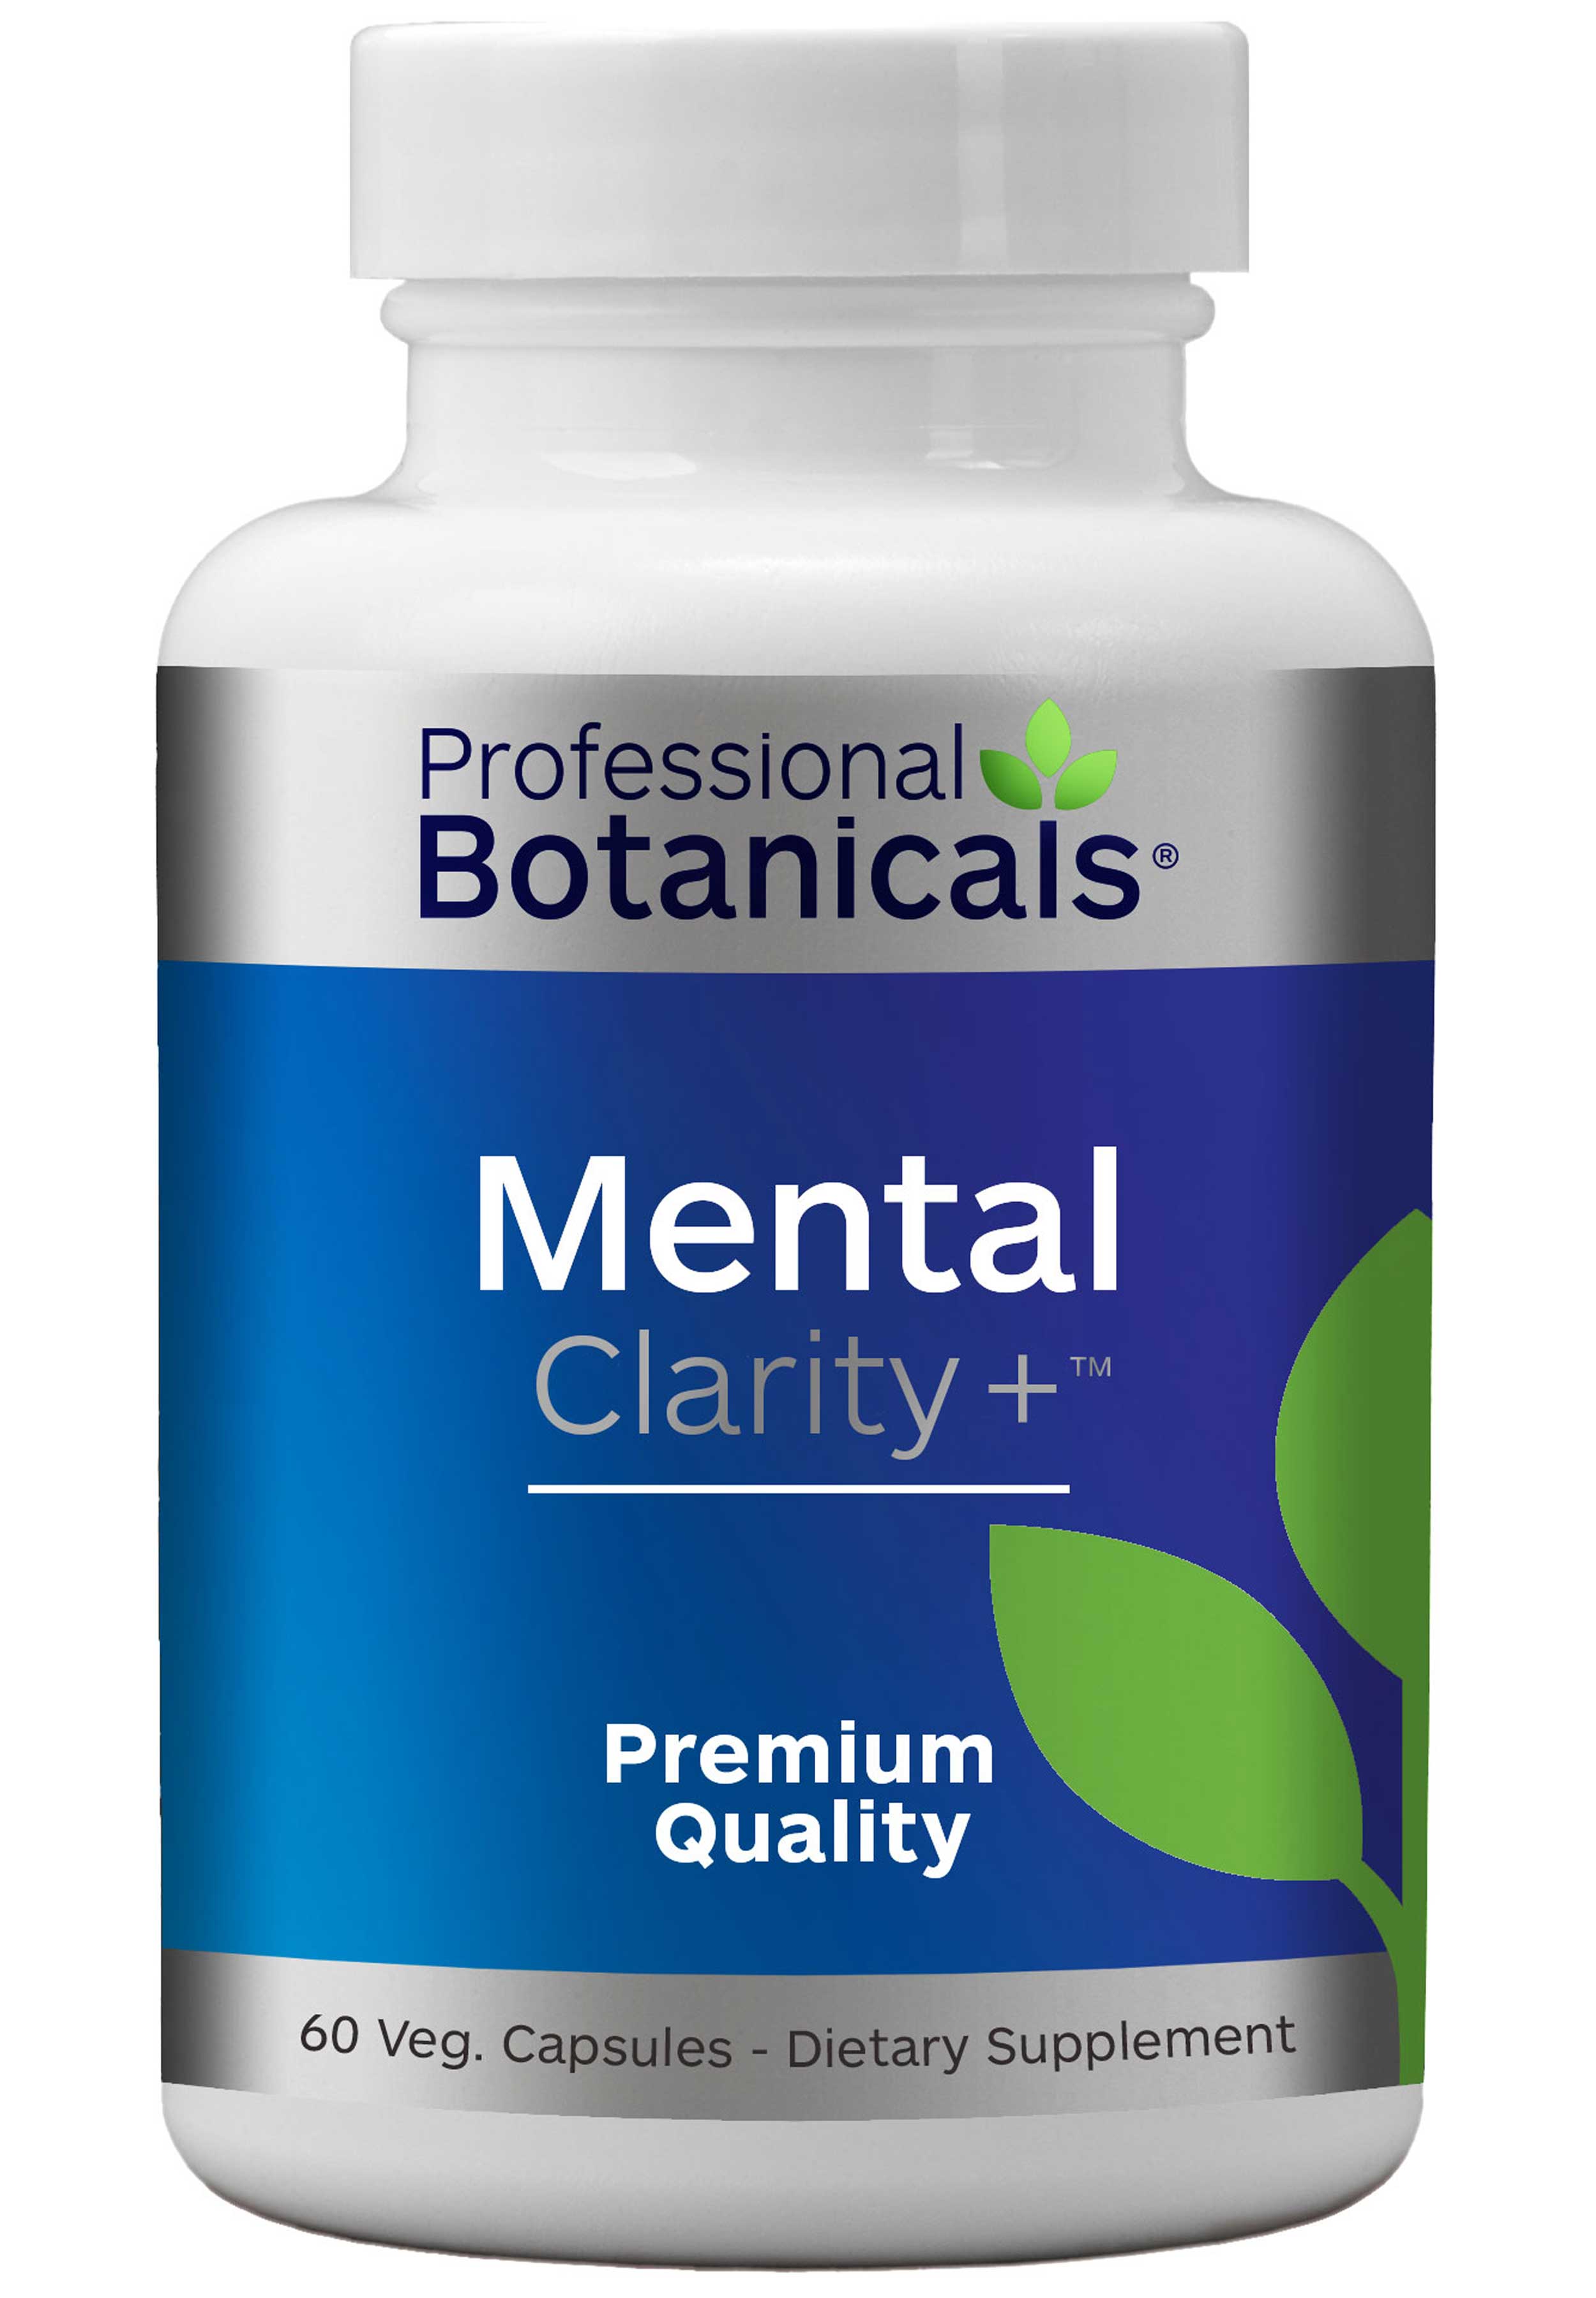 Professional Botanicals Mental Clarity +